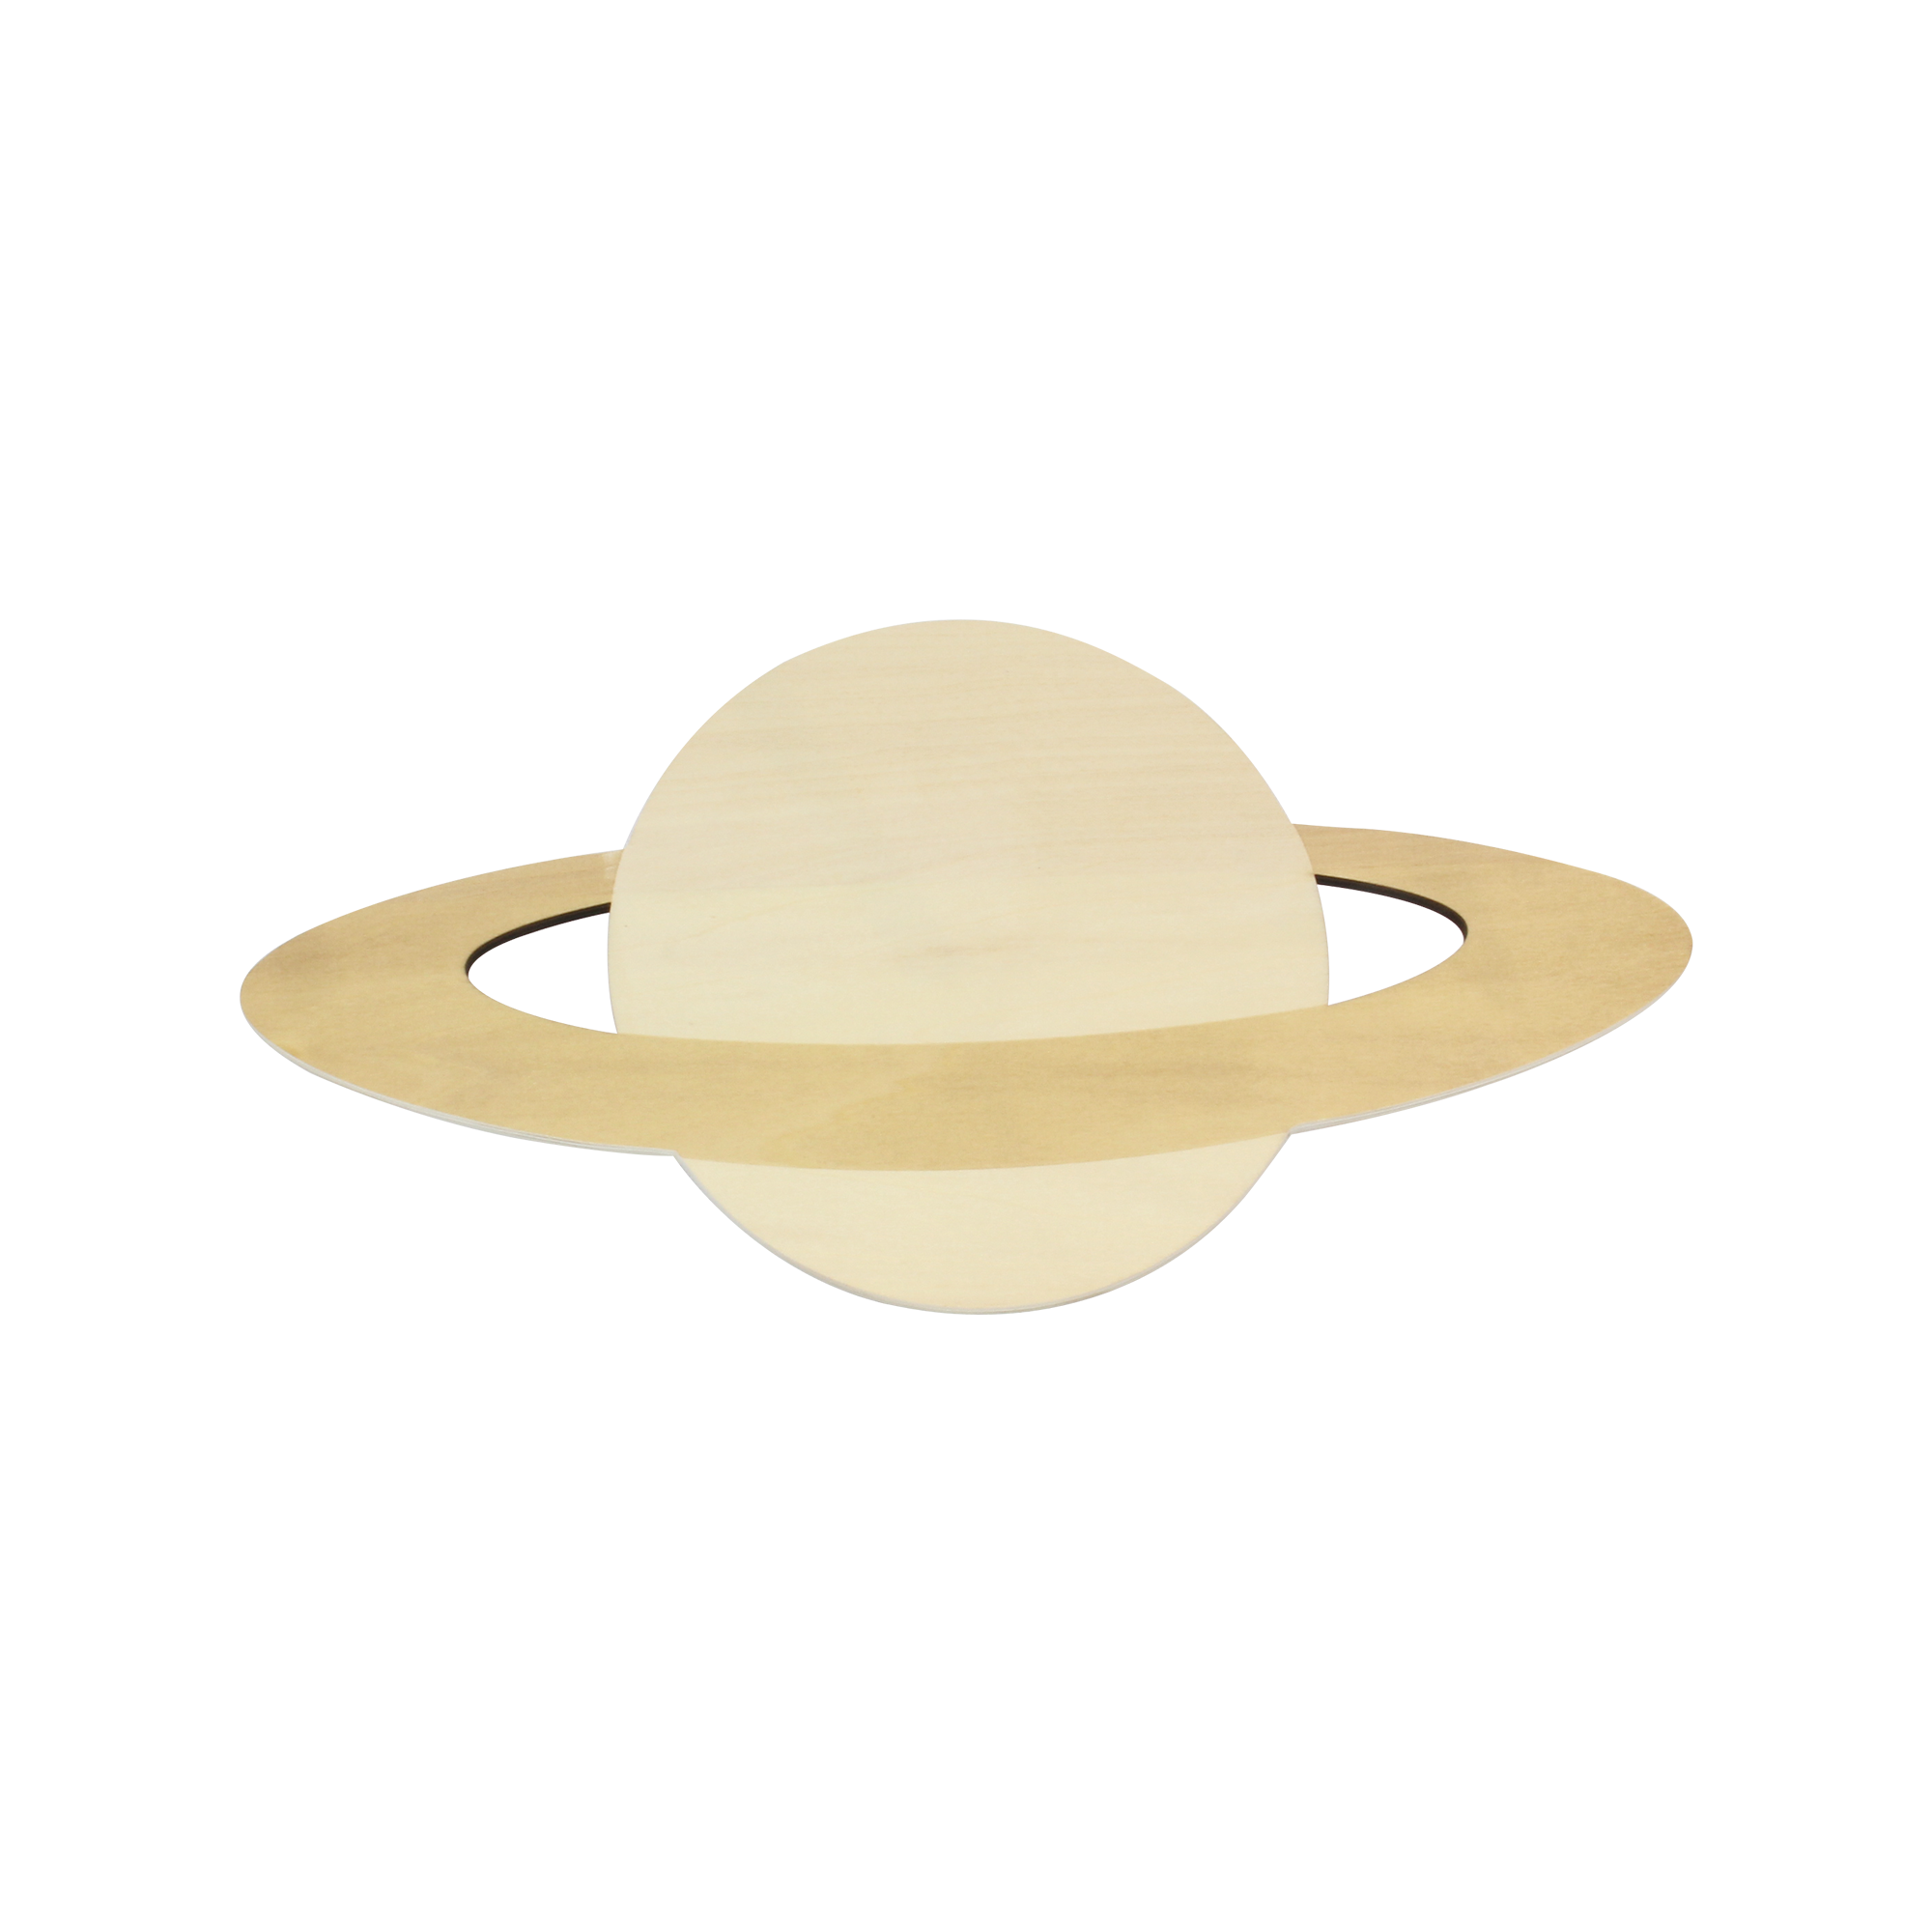 Wooden Silhouette Wall Light – Saturn